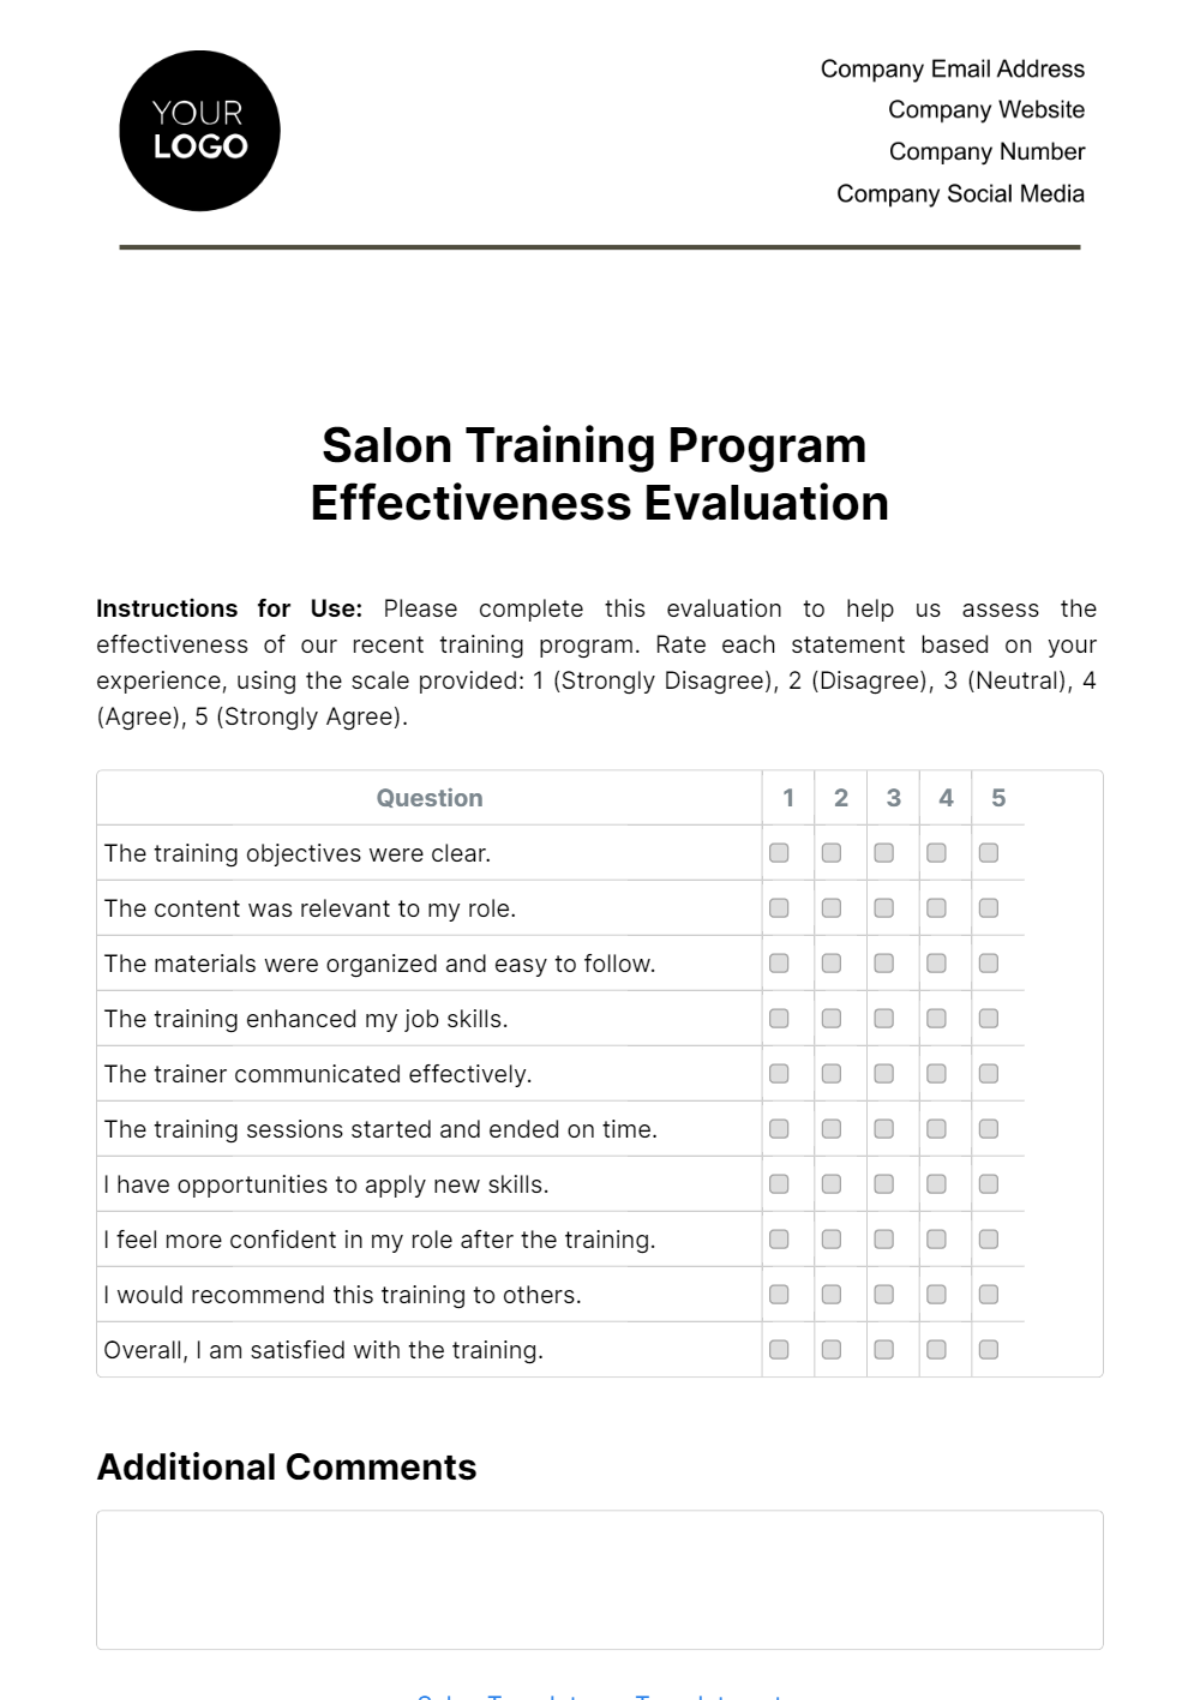 Salon Training Program Effectiveness Evaluation Template